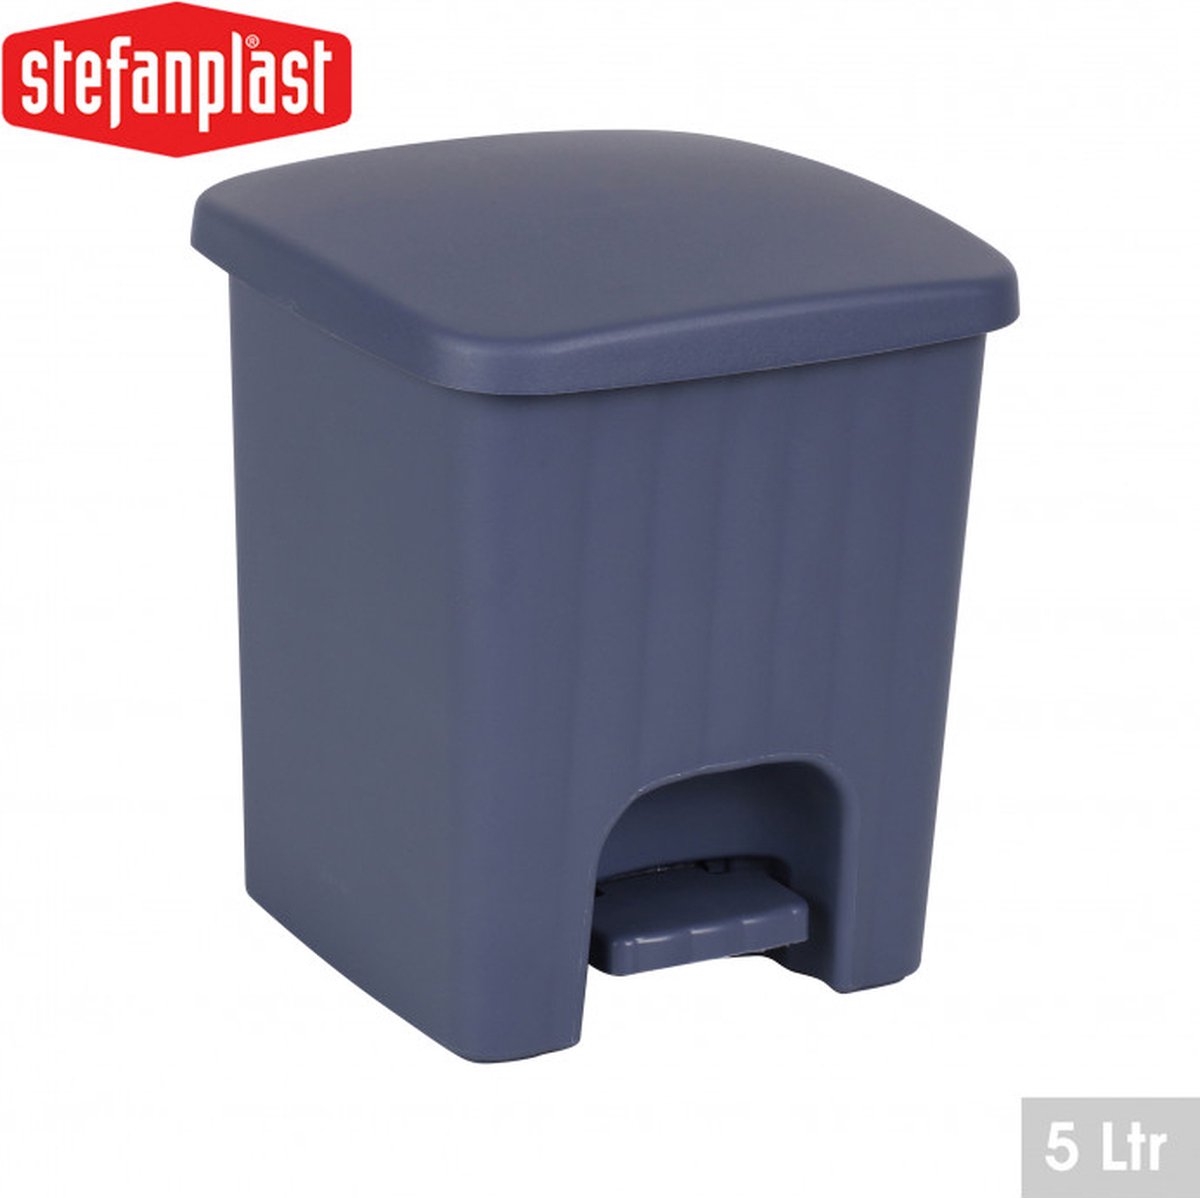 Stefanplast prullenbak - vuilbak - prullenbak badkamer - prullenbak met pedaal plastiek - 5l blauw